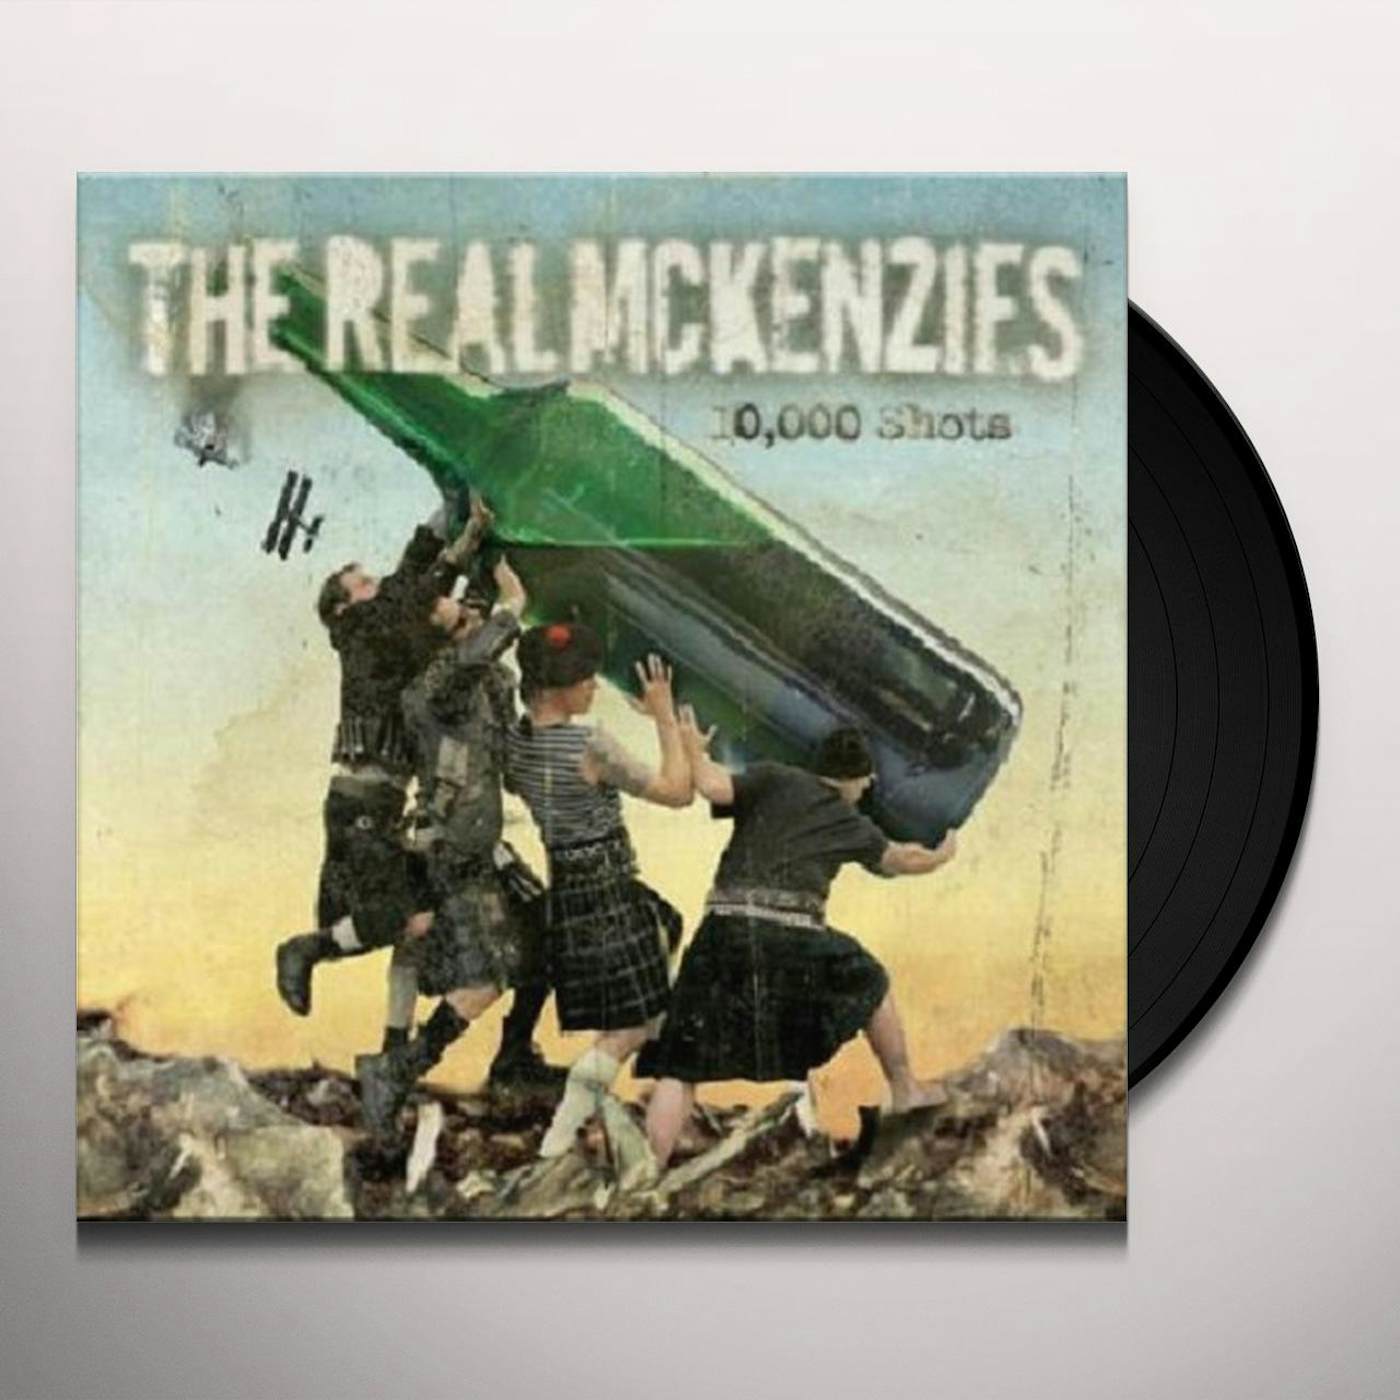 The Real McKenzies 10,000 Shots Vinyl Record